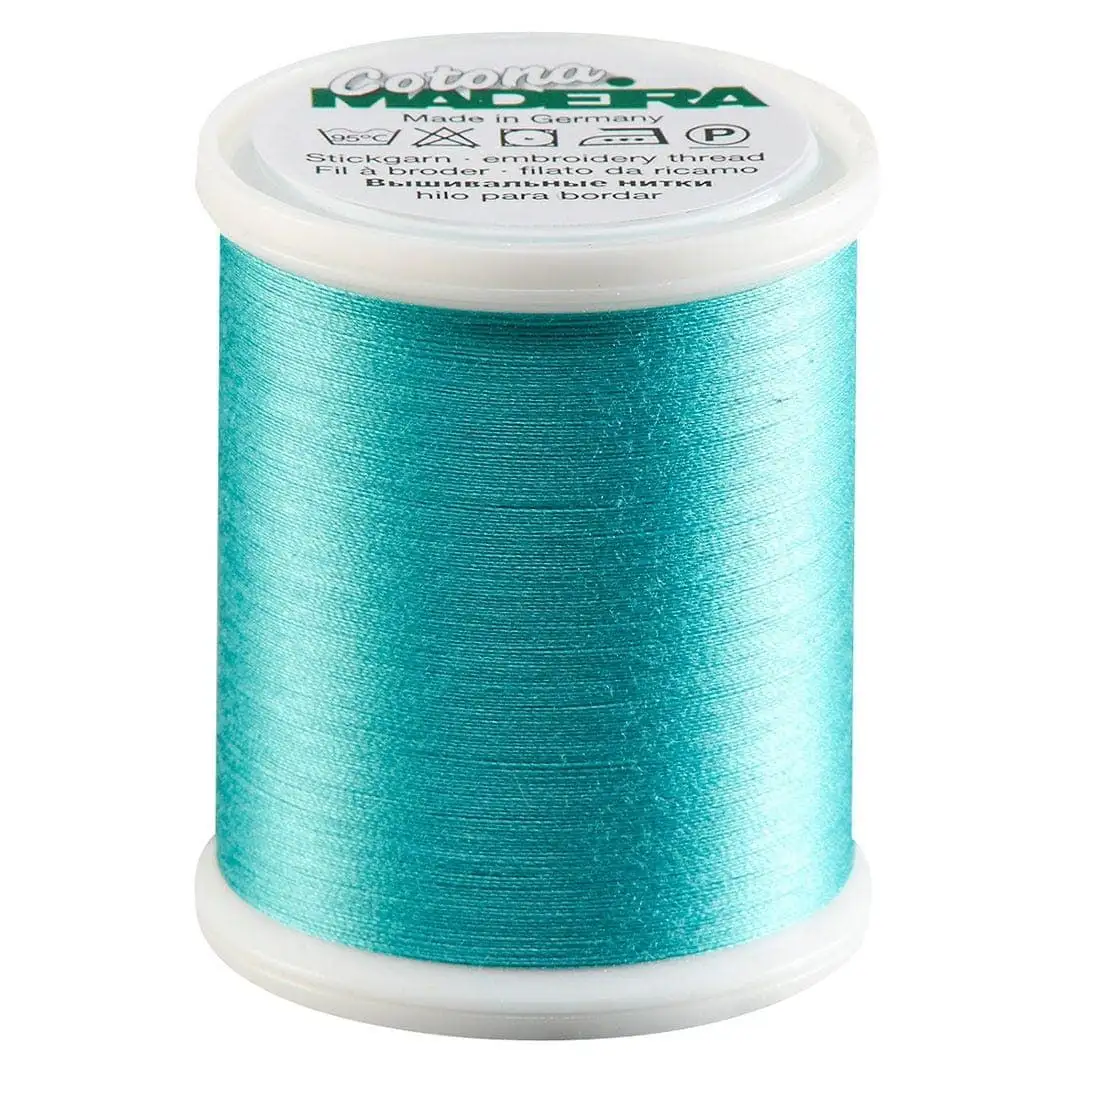 Madeira Cotona 50wt Cotton - 666 Carribean Blue